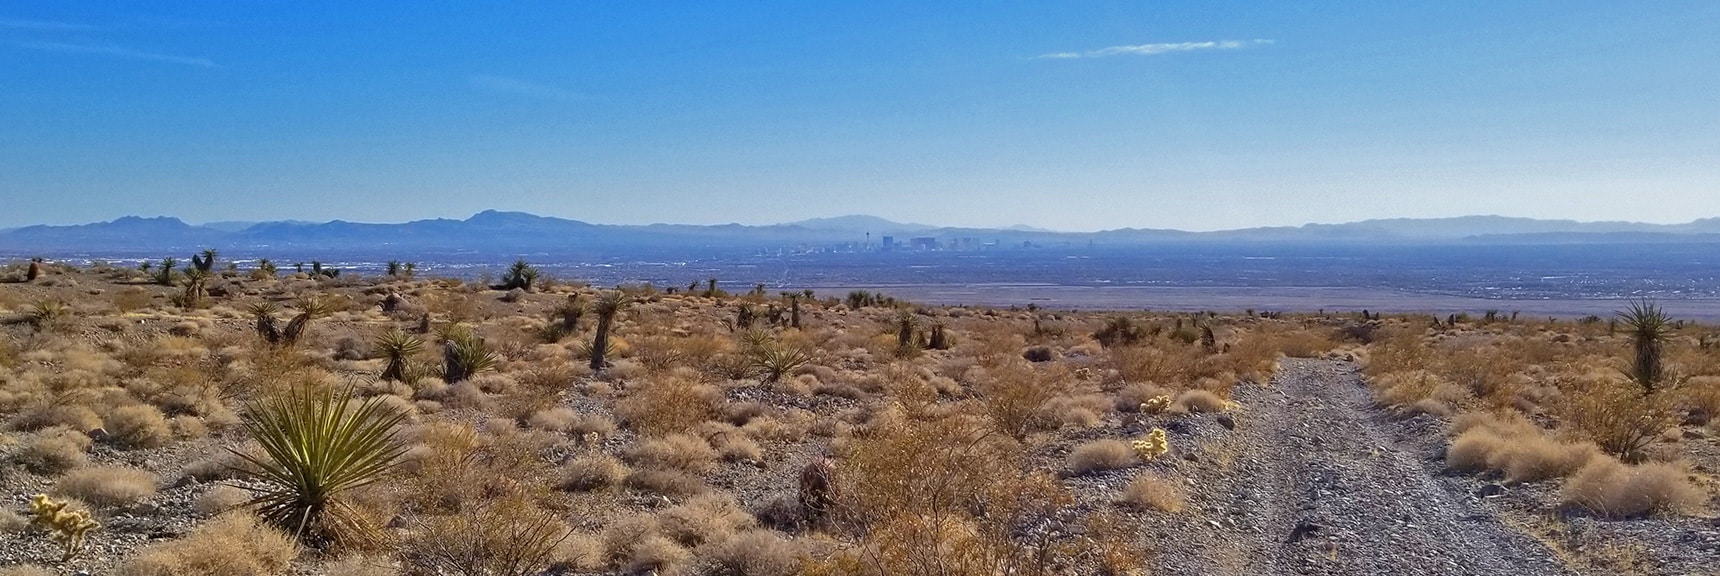 Las Vegas Strip Coming Into View | Gass Peak Road Circuit | Desert National Wildlife Refuge | Nevada